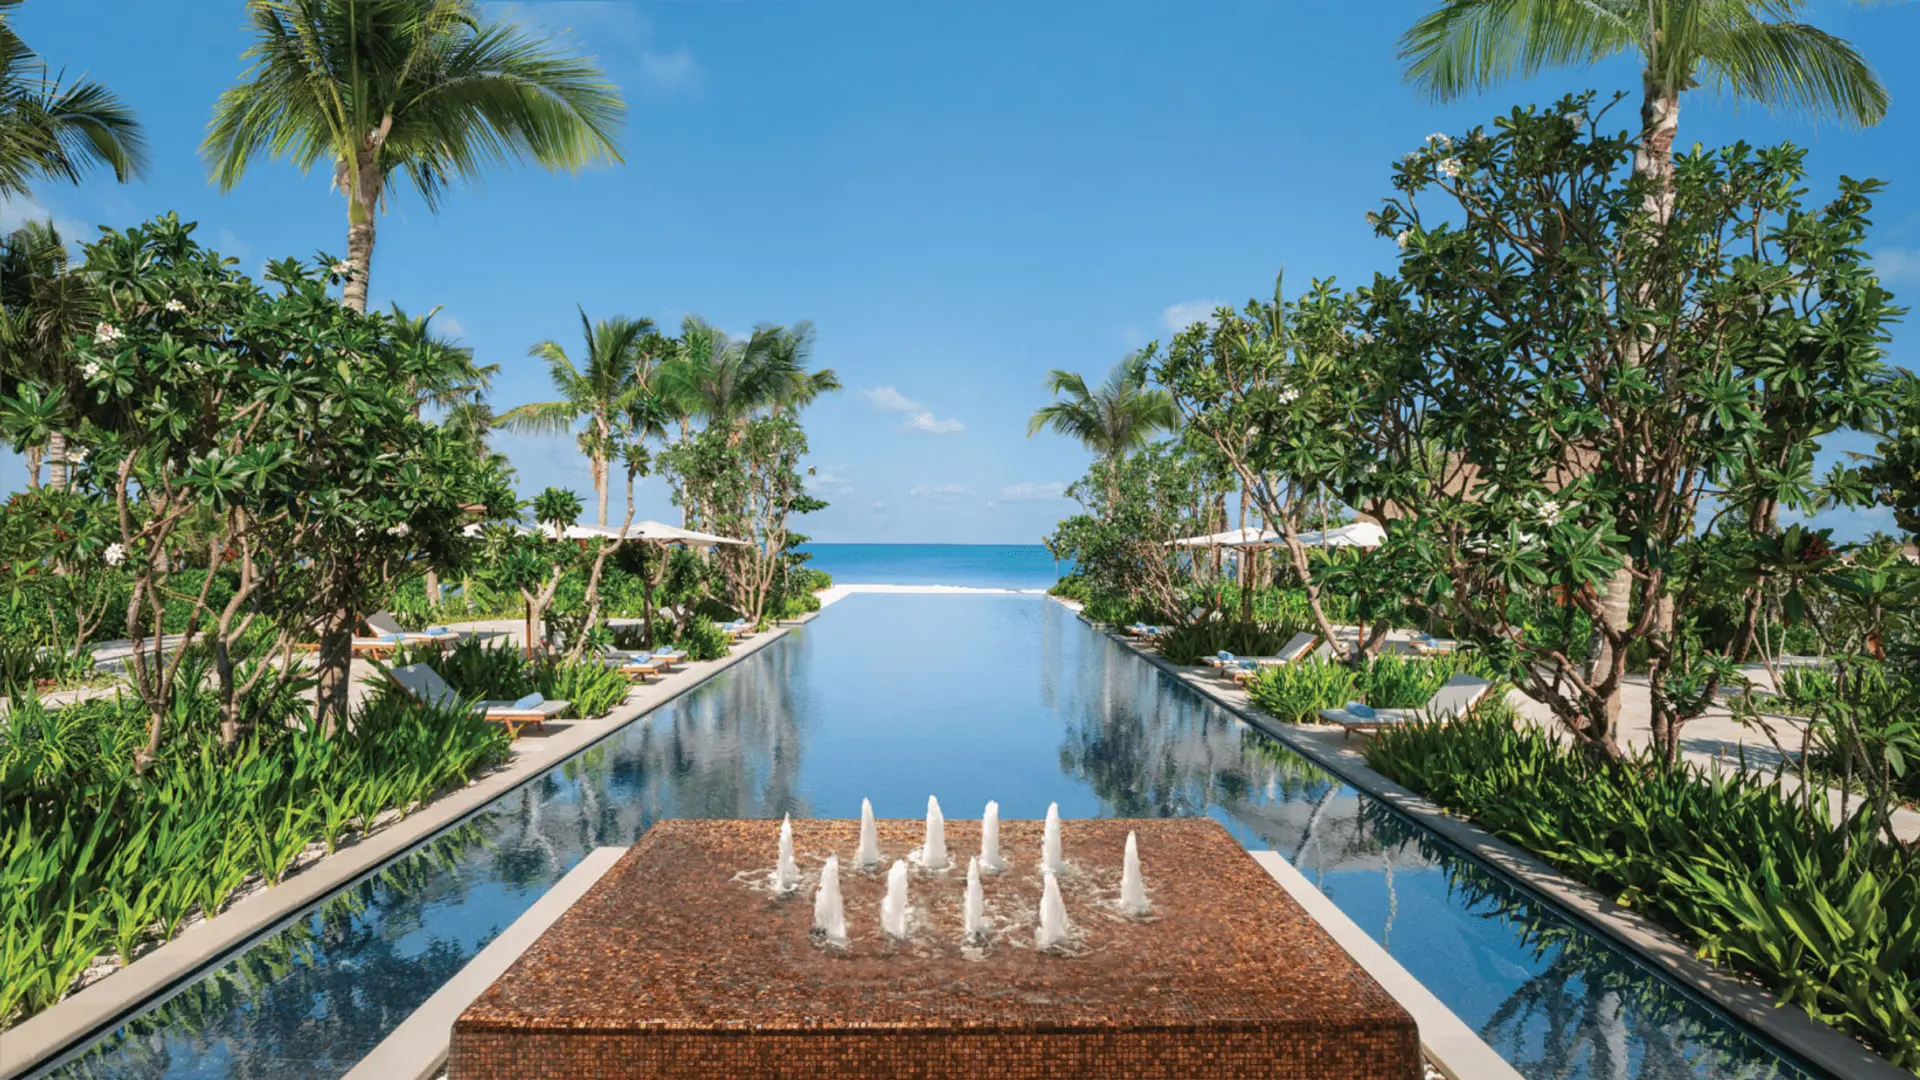 Hotel review Service & Facilities' - Waldorf Astoria Maldives Ithaafushi - 0